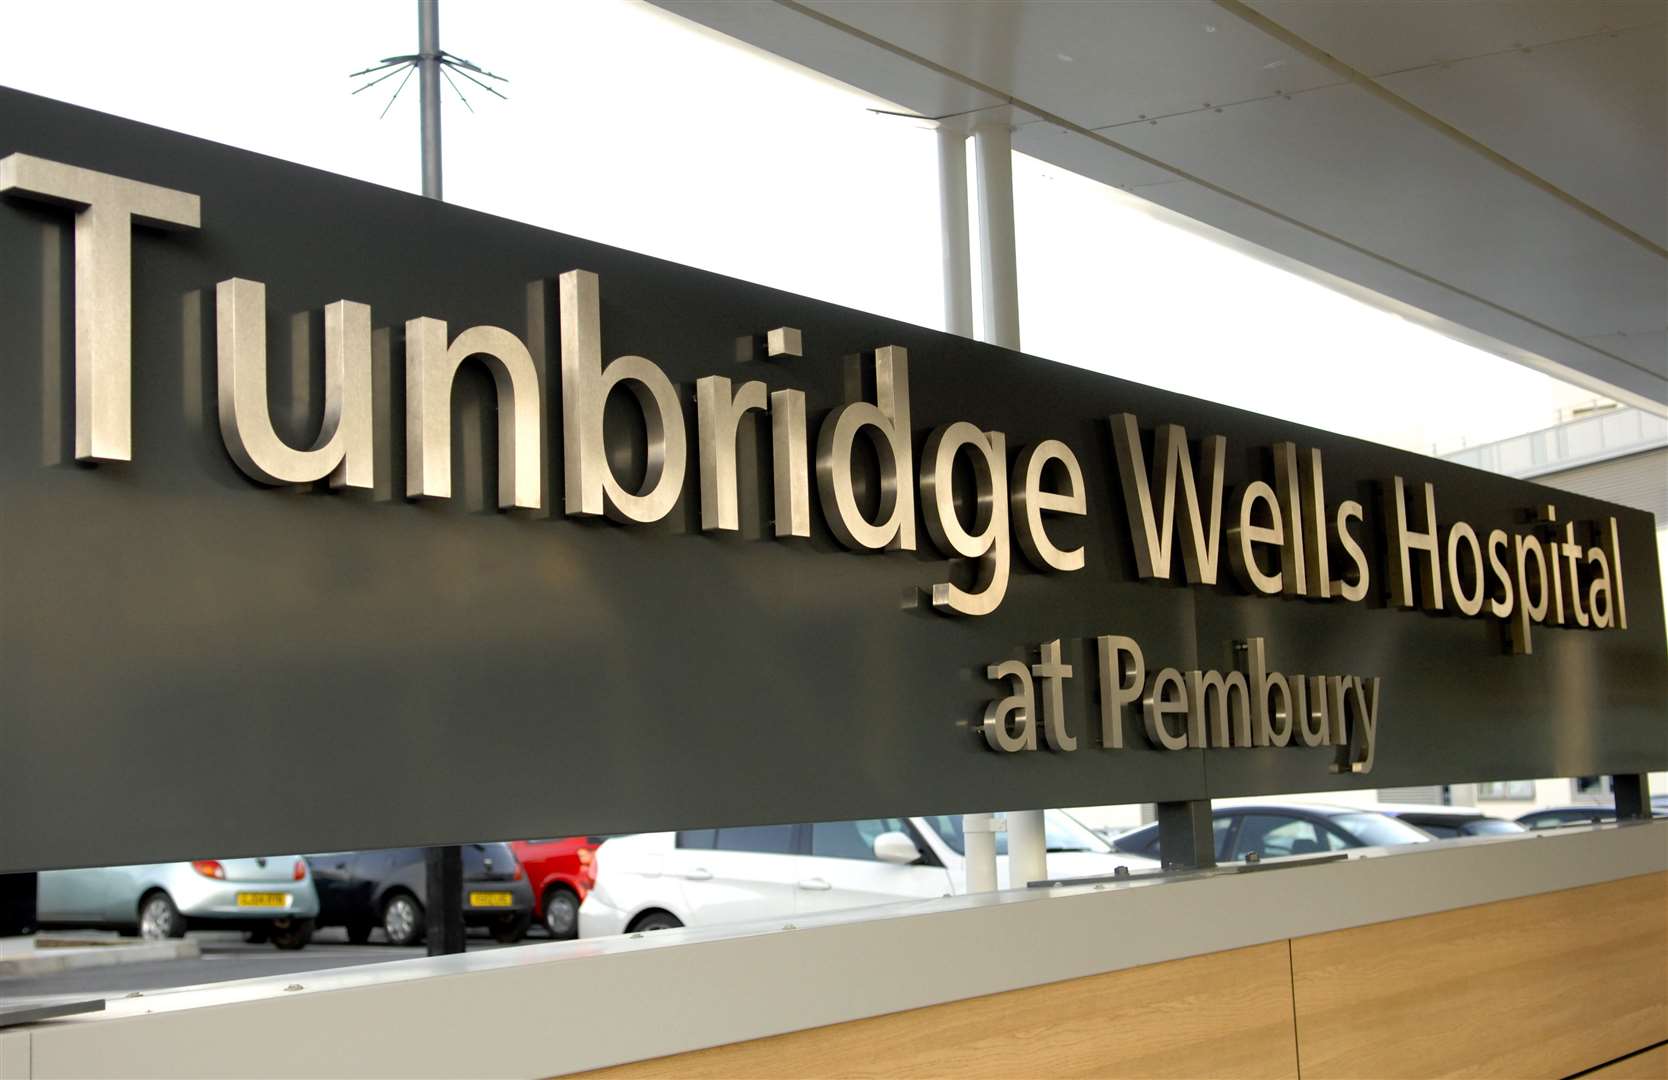 The Tunbridge Wells Hospital at Pembury. Picture Matthew Walker